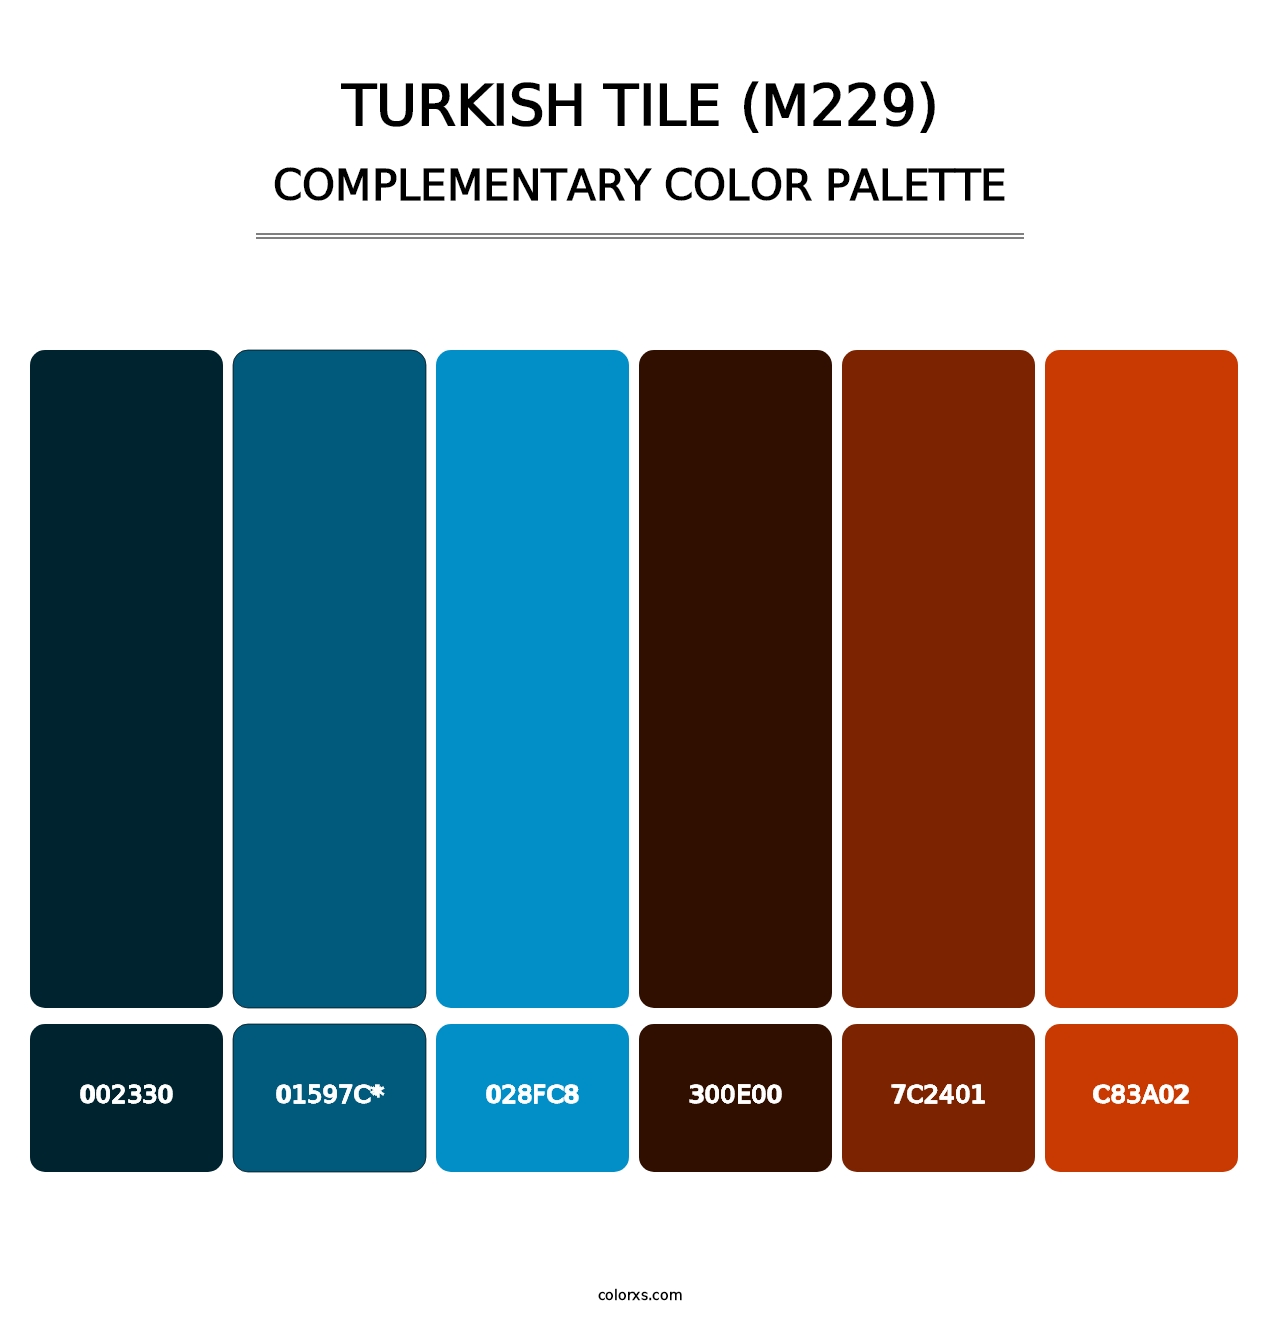 Turkish Tile (M229) - Complementary Color Palette